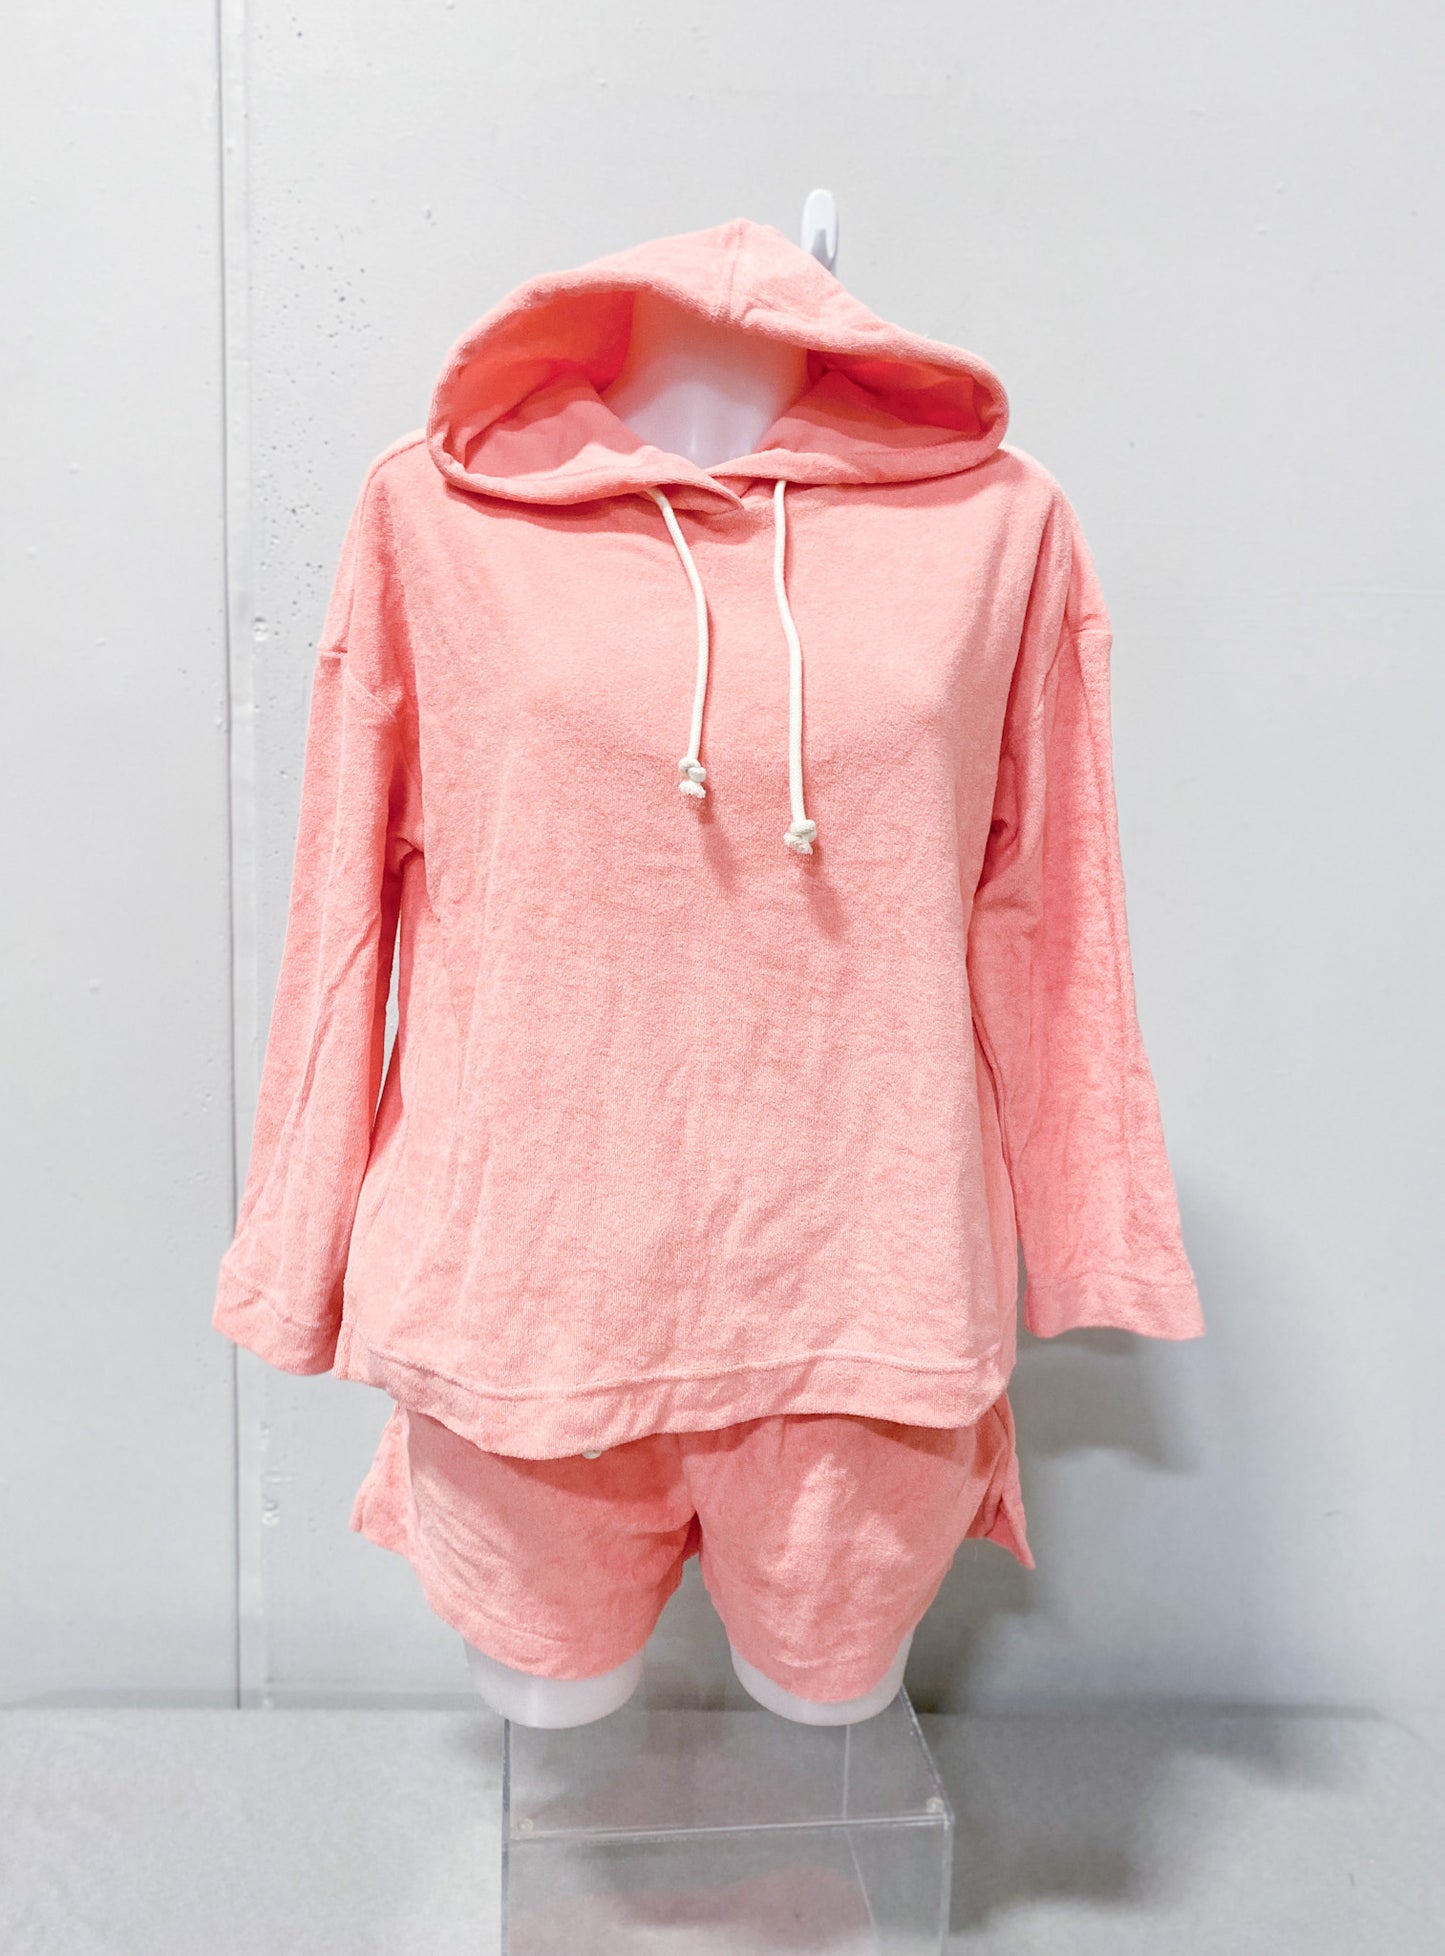 Women's Peach Pajama Set (Size Small)